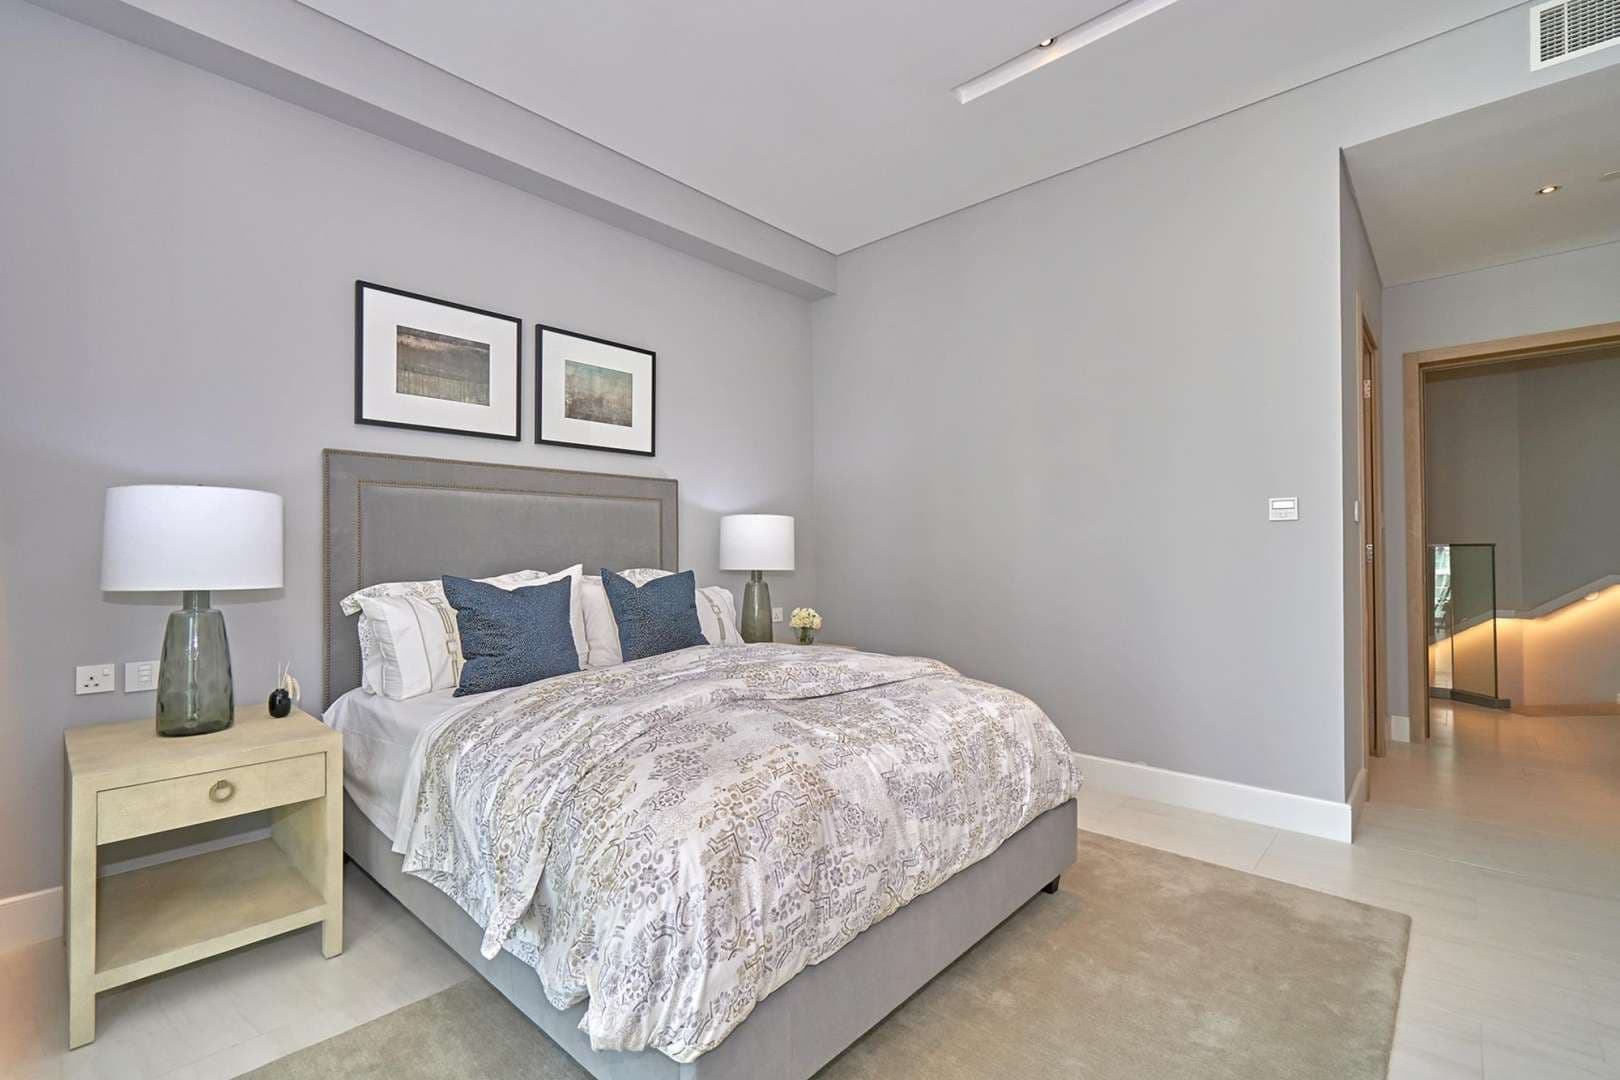 2 Bedroom Apartment For Sale Sls Dubai Hotel Residences Lp06655 1b890d30812b0d00.jpg